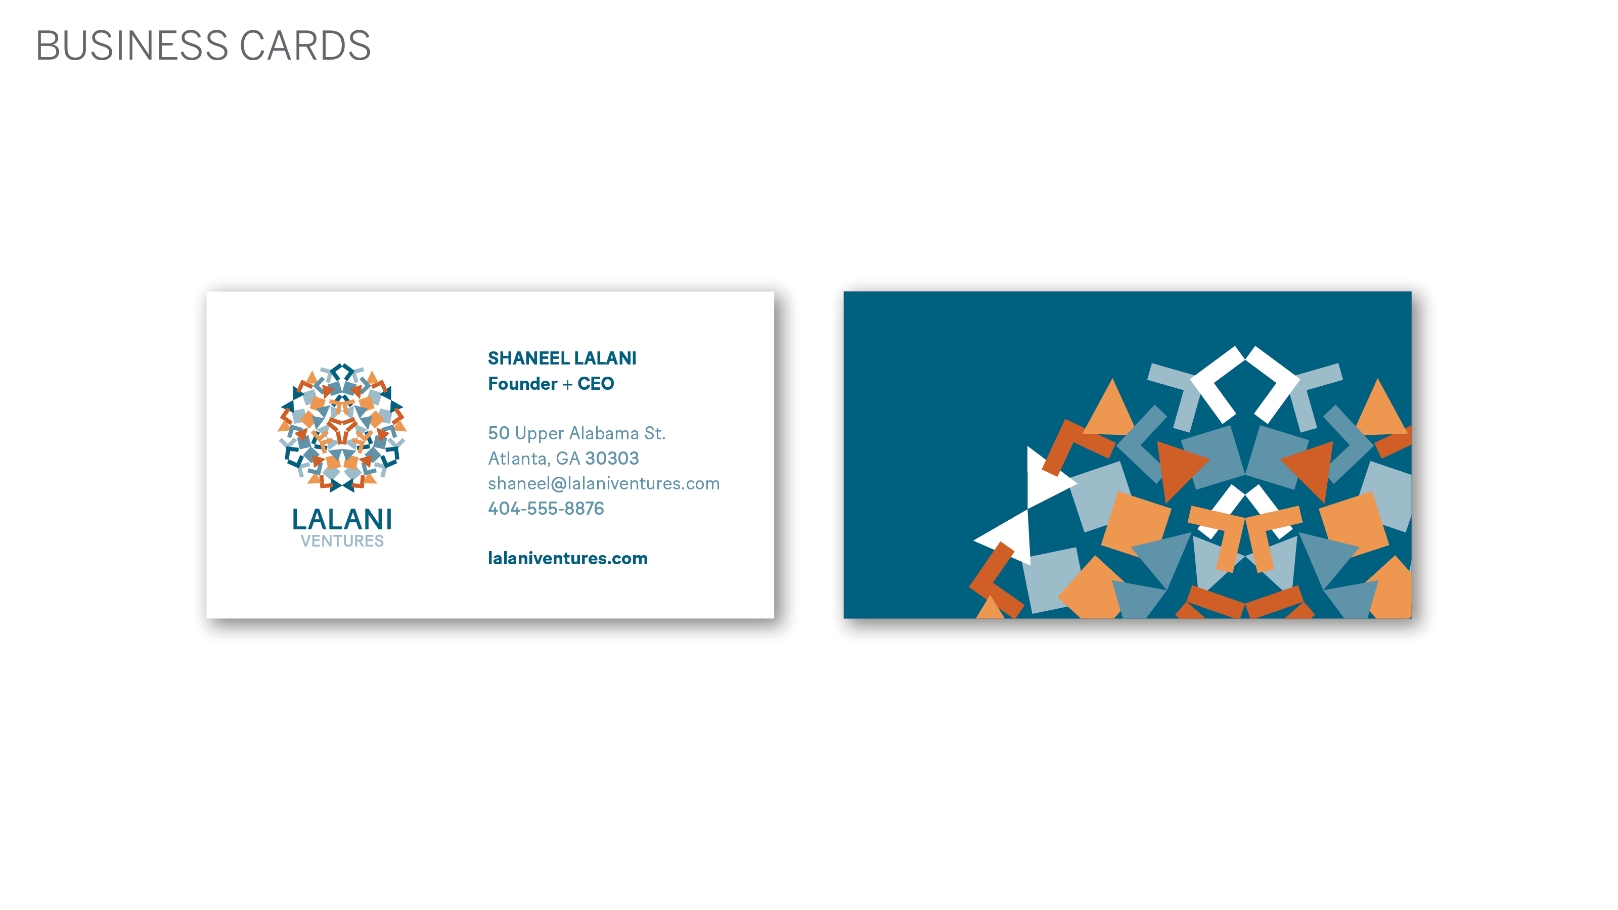 Lalani Ventures business cards